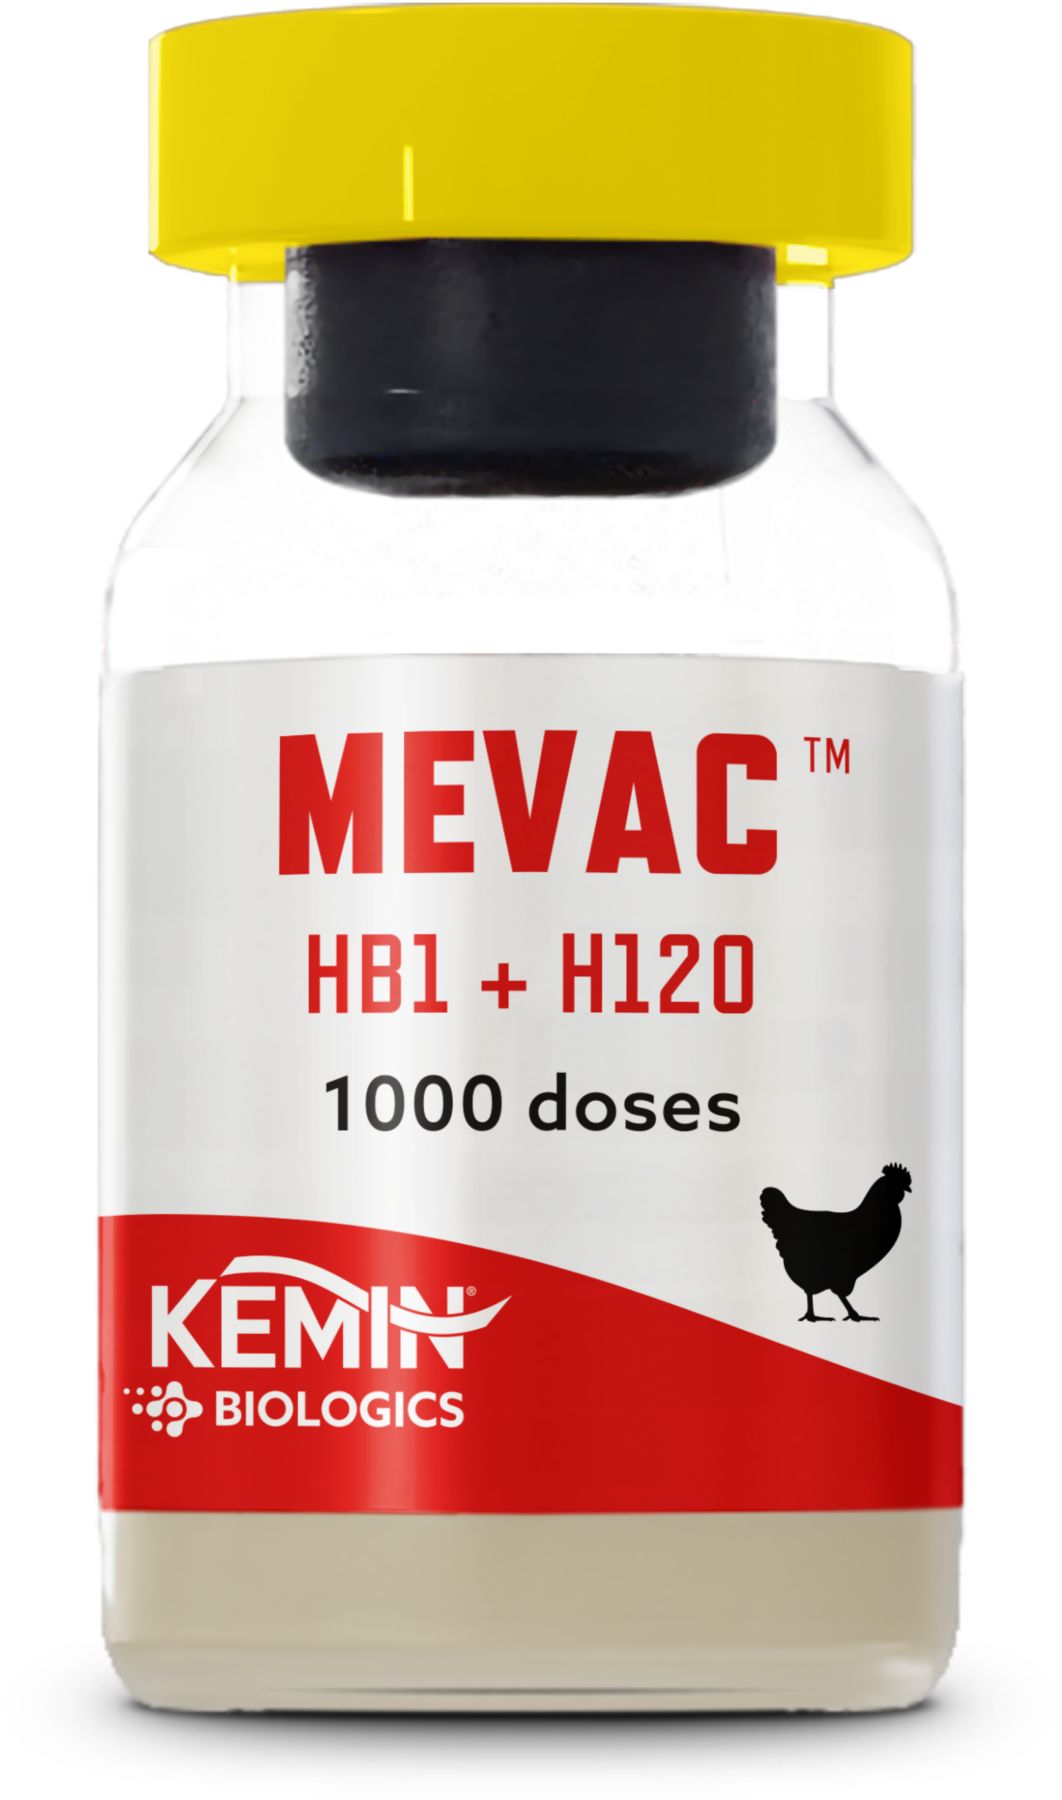 Mevac HB1 H120 small label mockup